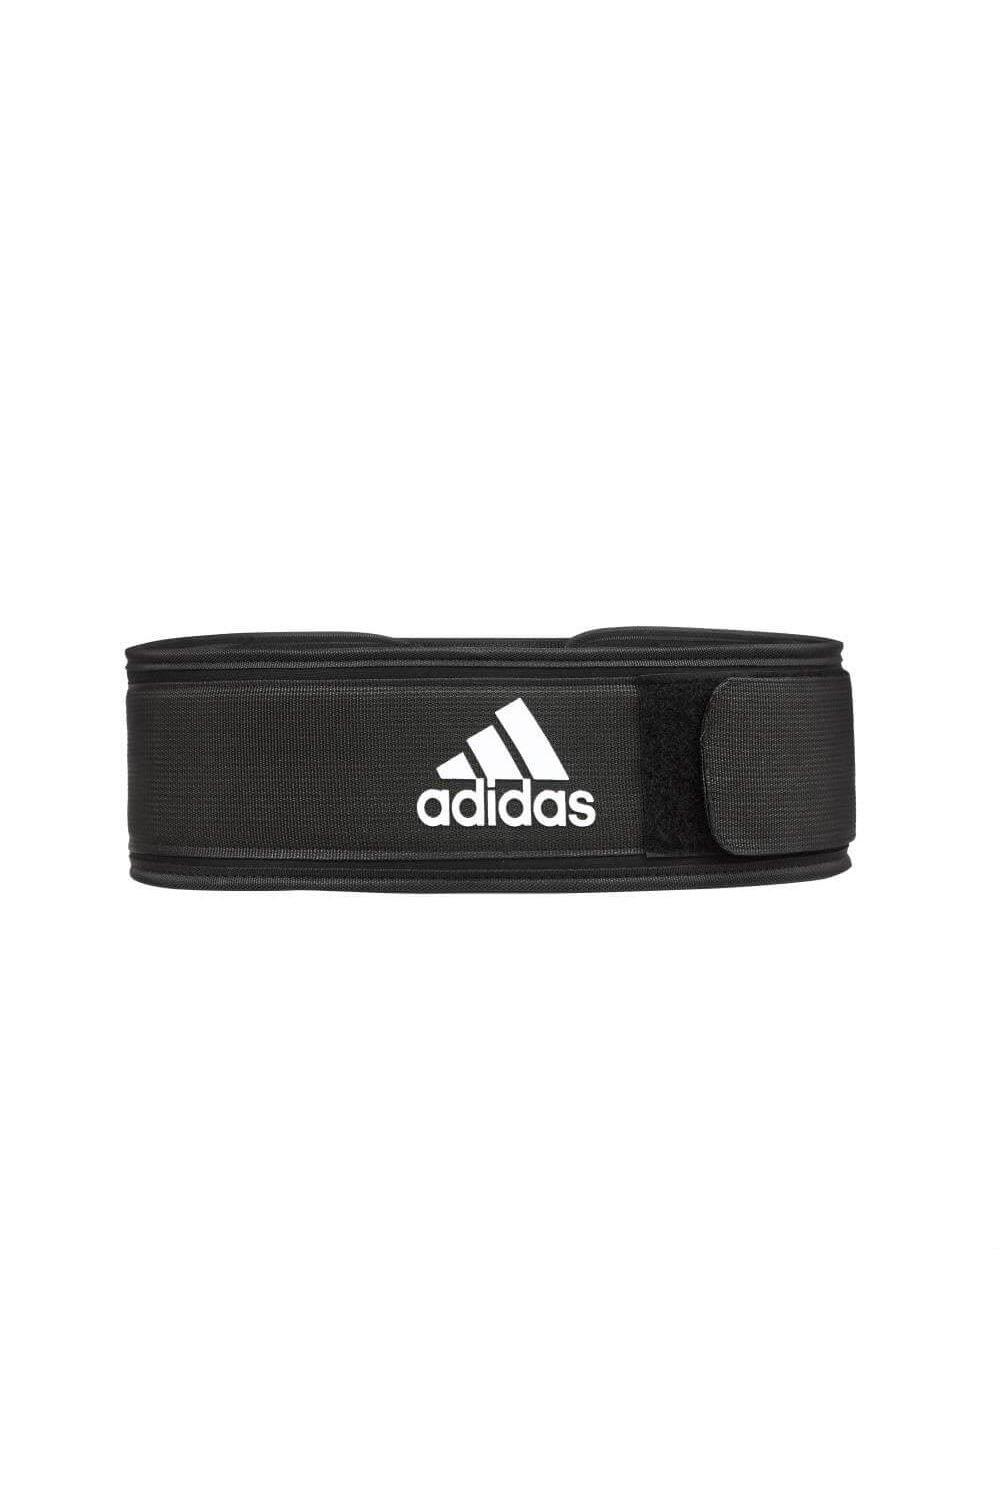 Adidas Essential Weight Lifting Belt|Size: XL|black